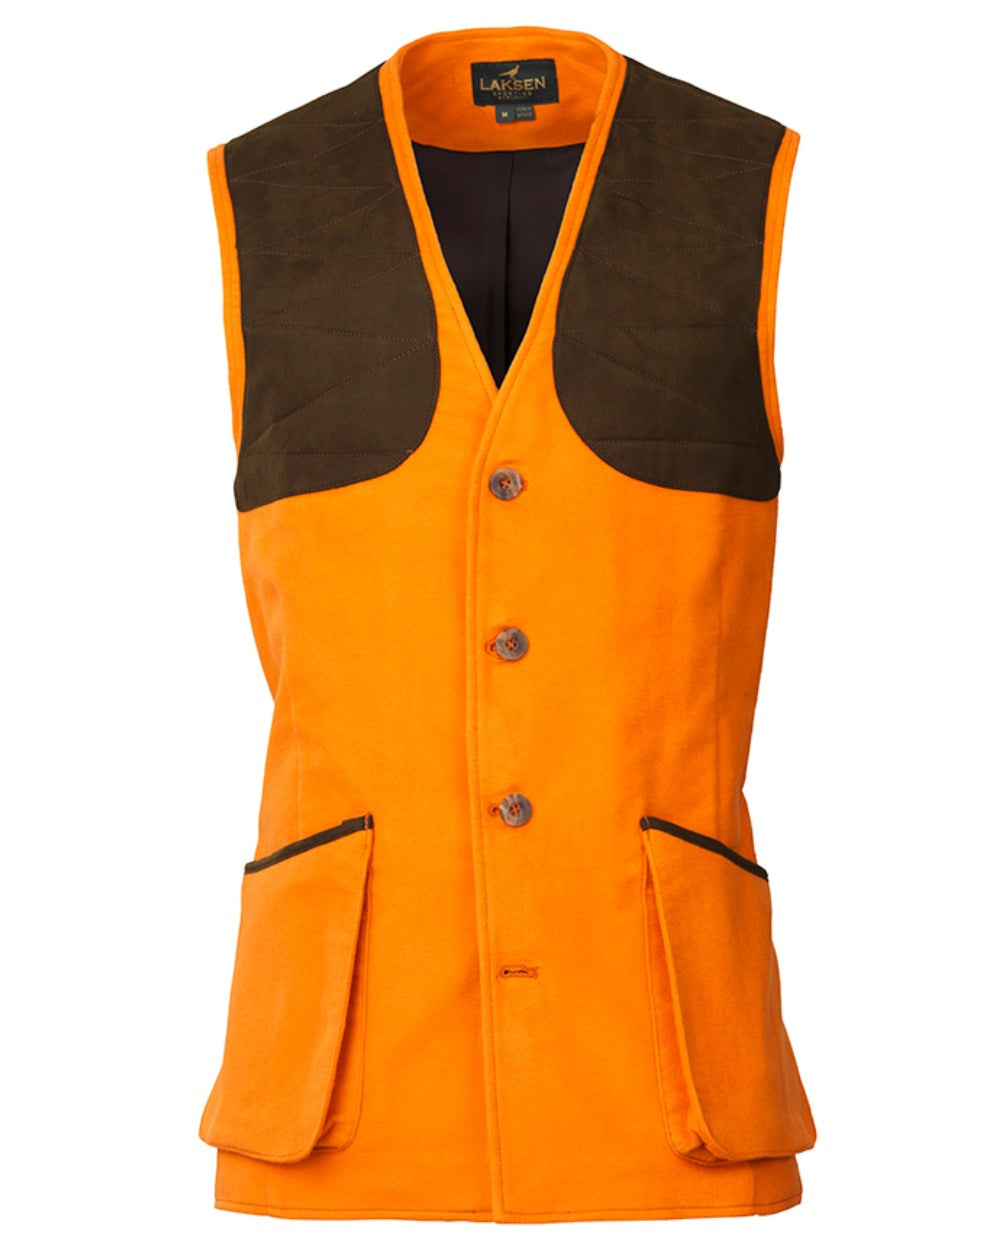 Blaze Orange Coloured Laksen Belgravia Leith Shooting Vest On A White Background 